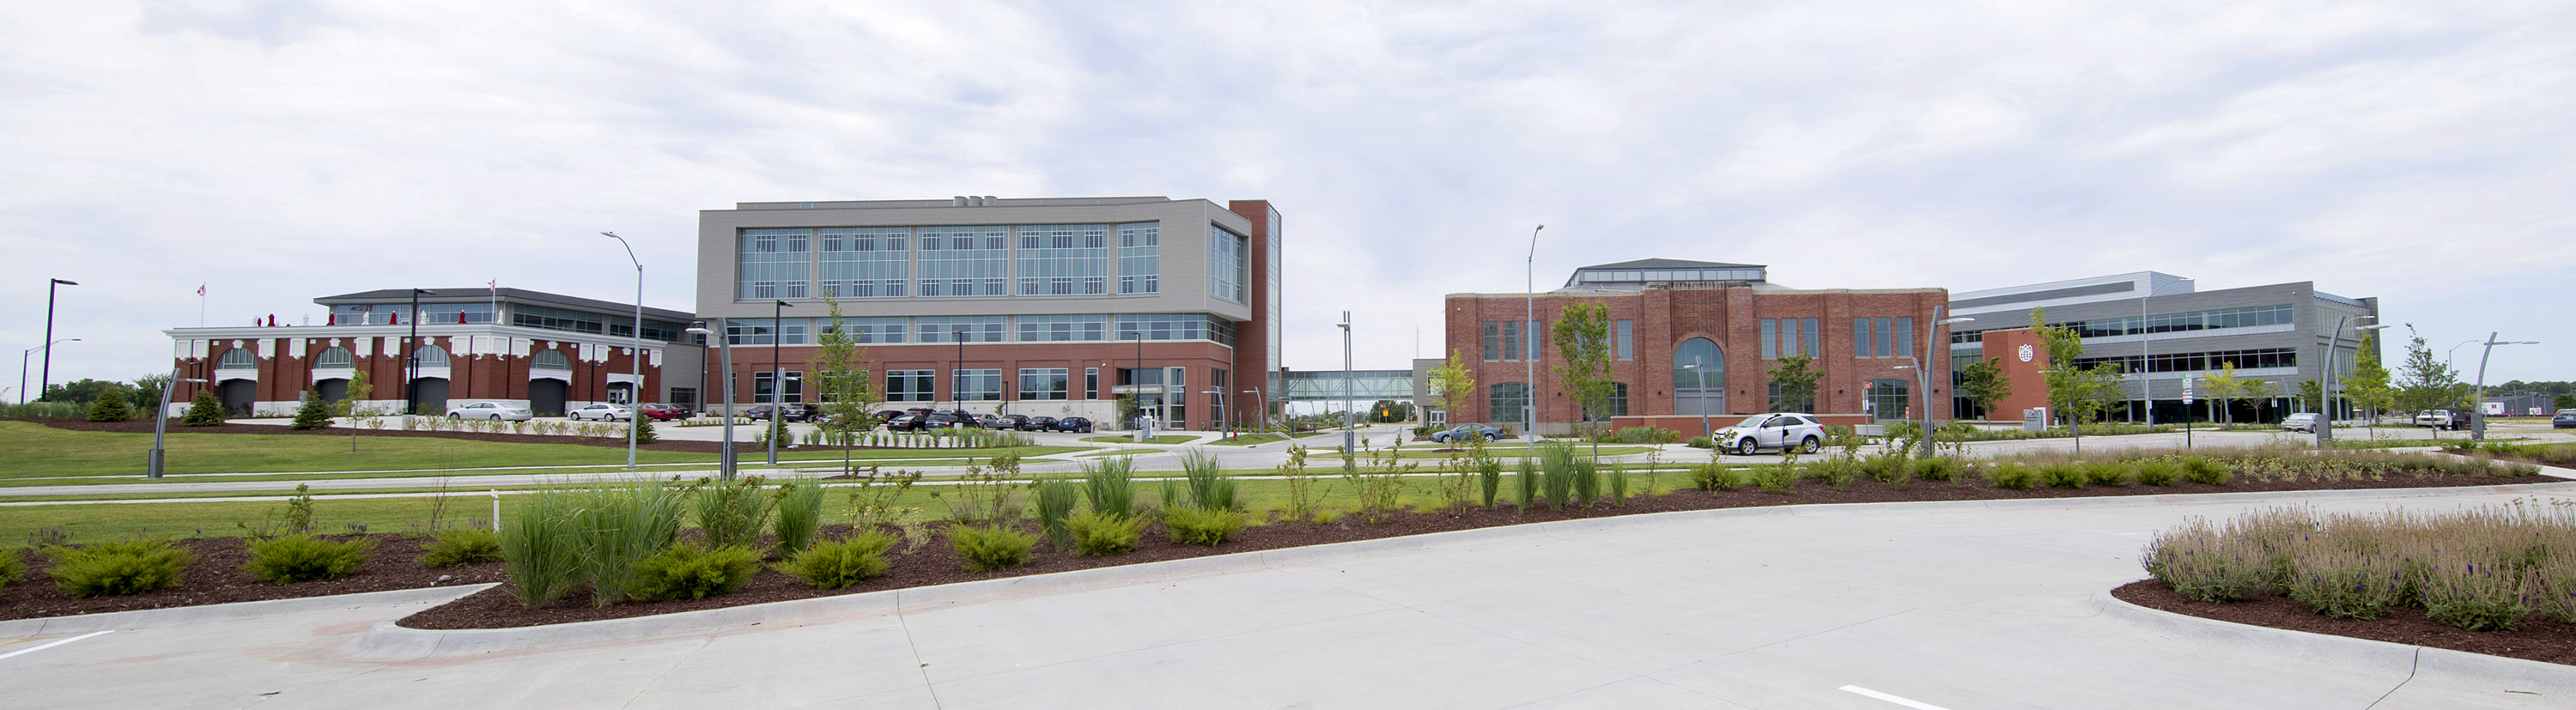 Nebraska Innovation Campus. June 23, 2016. Photo by Craig Chandler / University Communications.